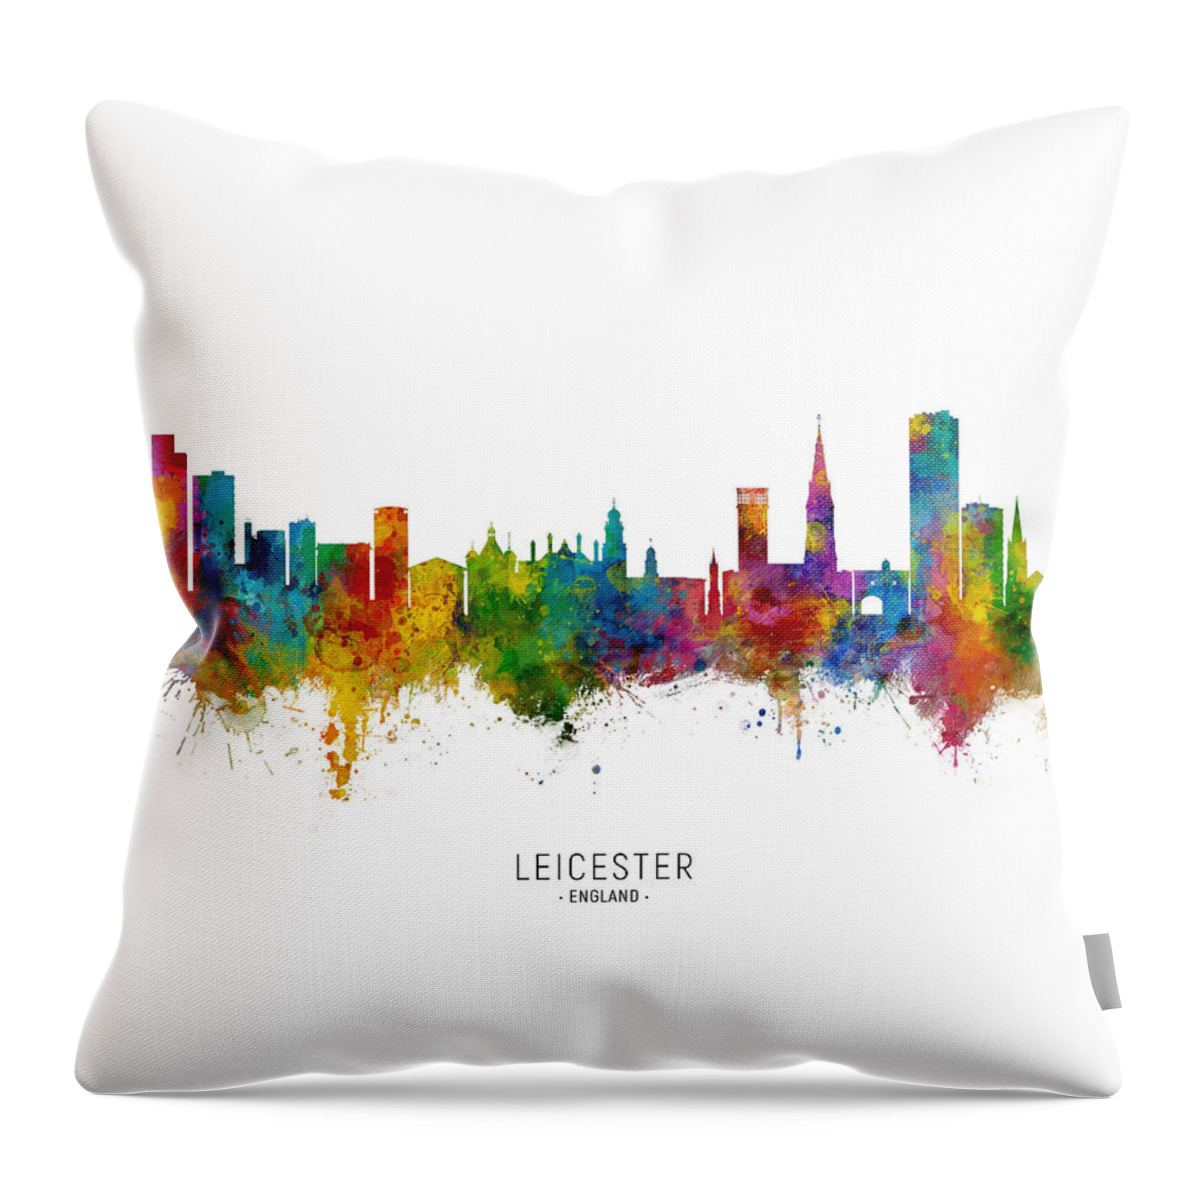 Leicester Throw Pillow featuring the digital art Leicester England Skyline by Michael Tompsett